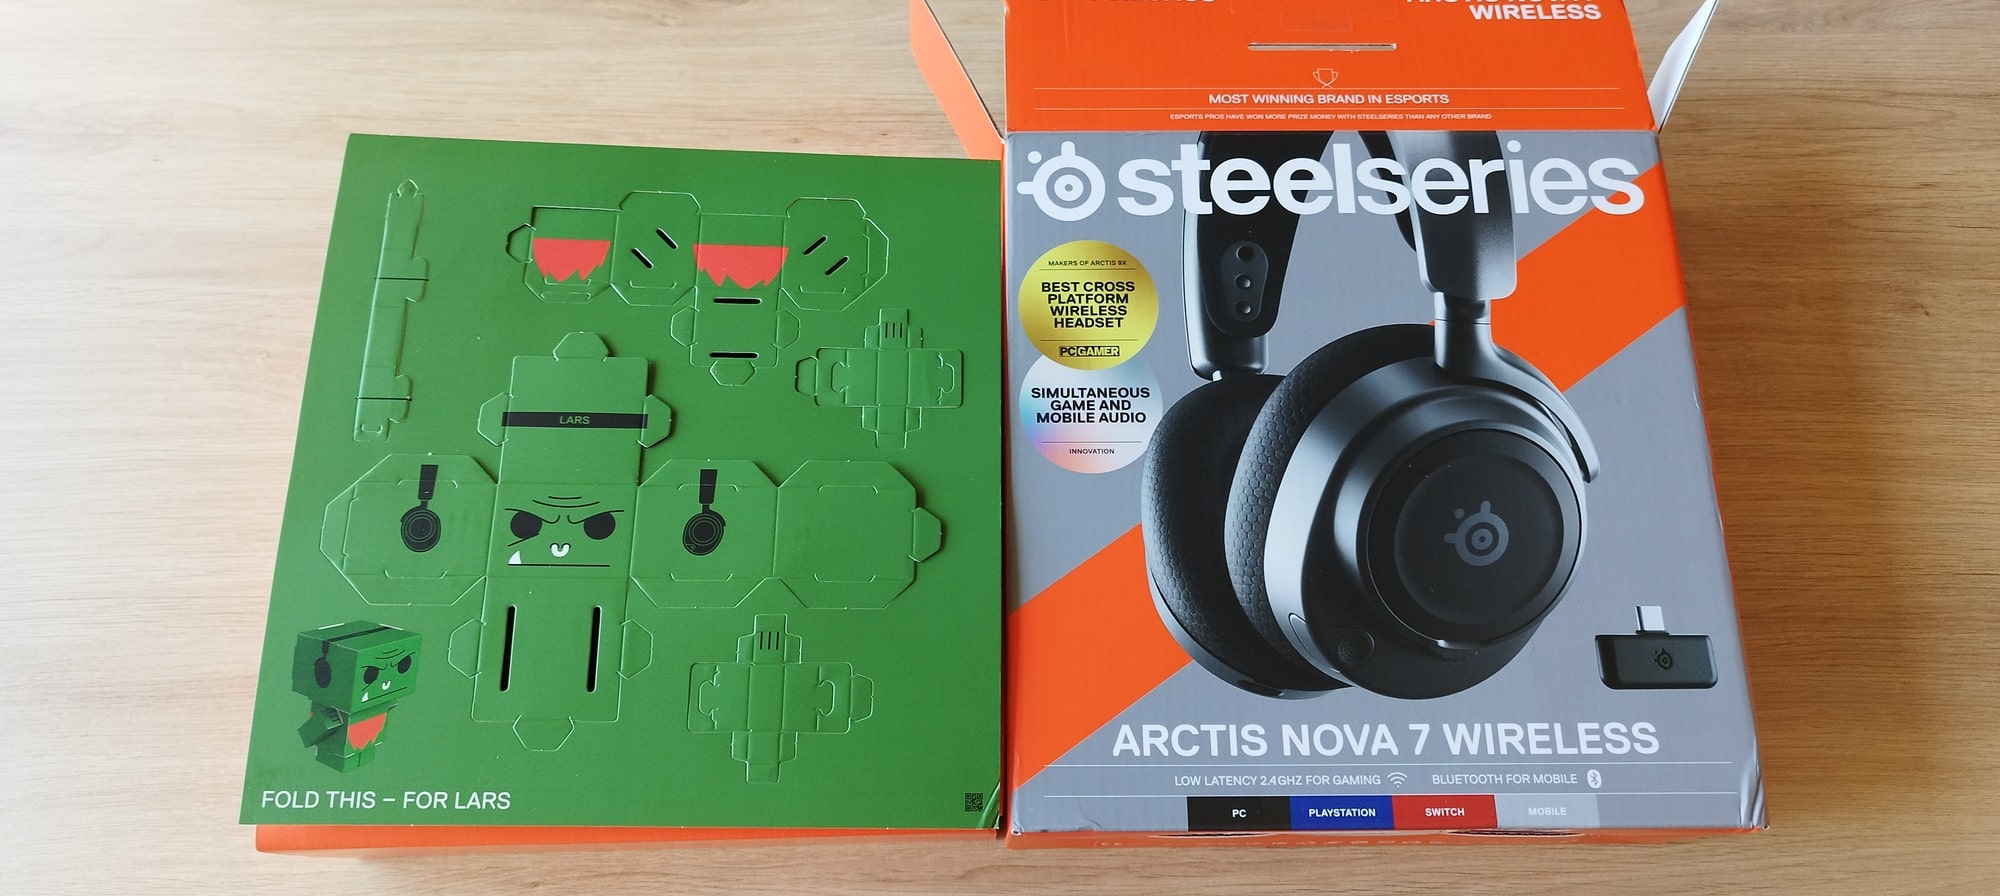 Steelseries Arctis Nova 7 Wireless 006